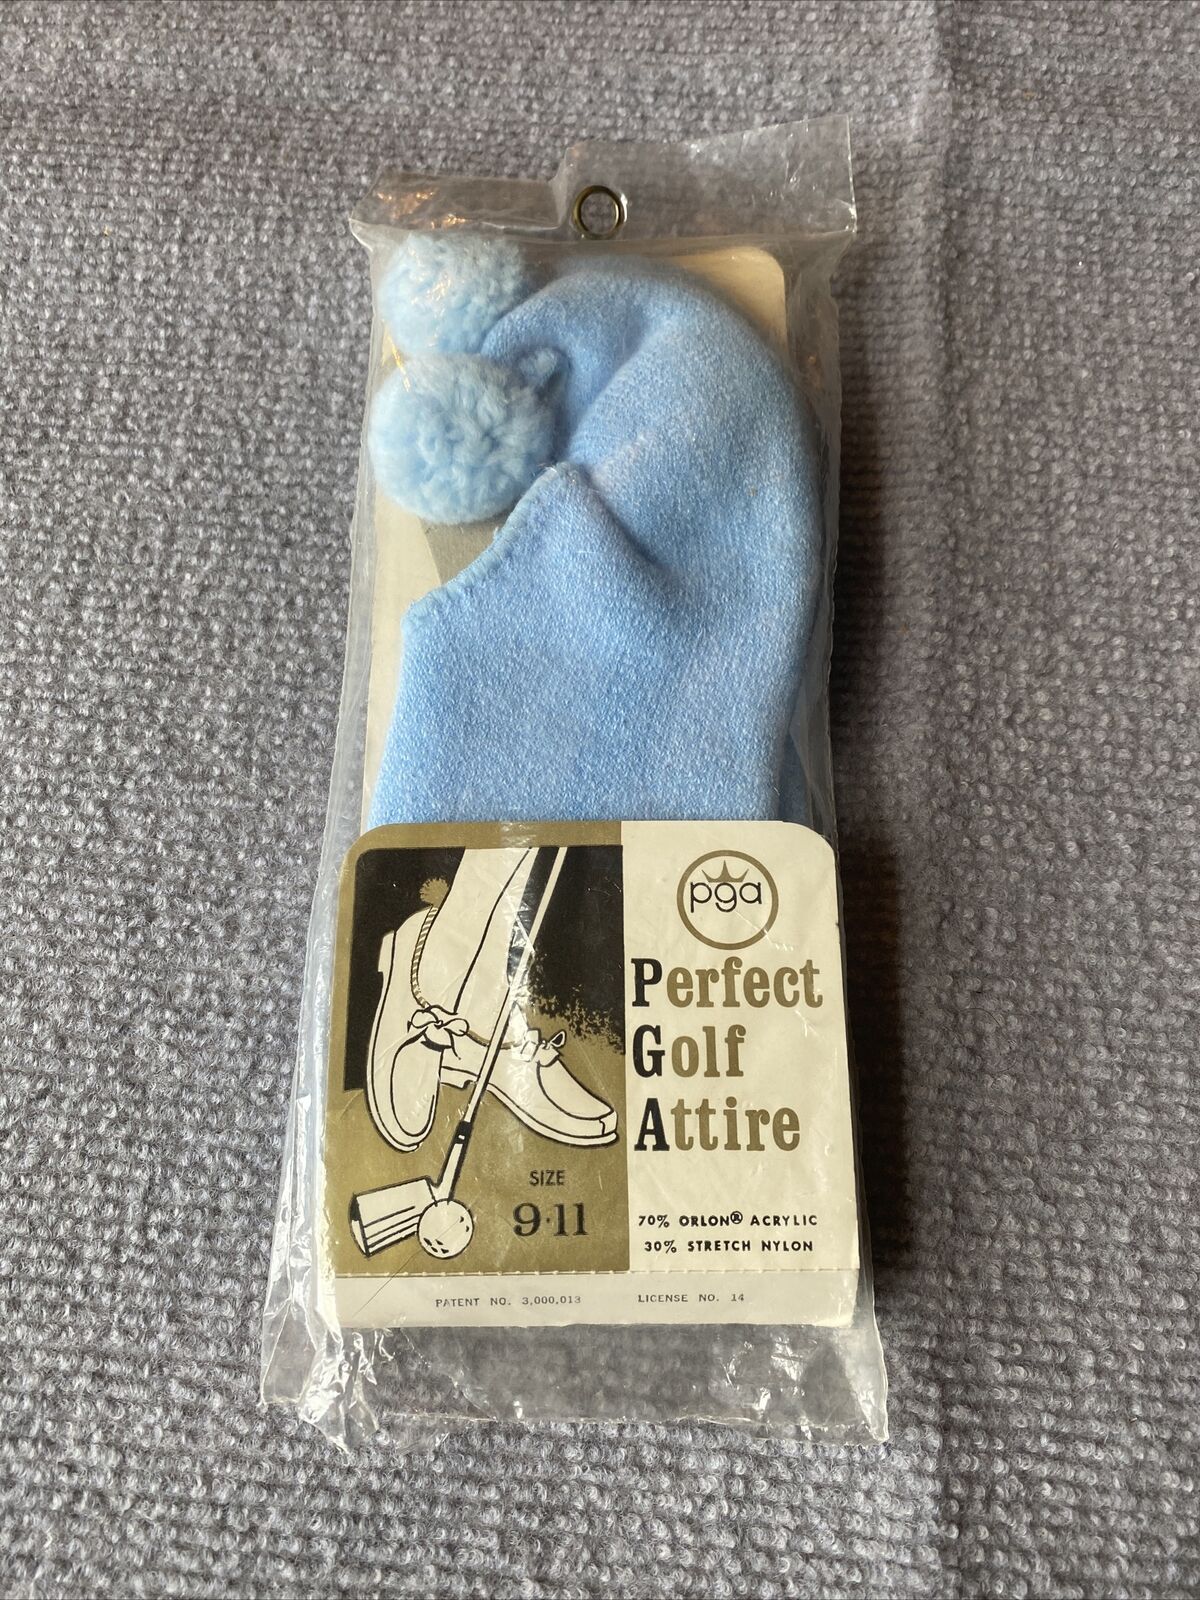 Vintage Perfect Golf Attire Pga Pom Pom Socks Blue Brand New Free Shipping L4